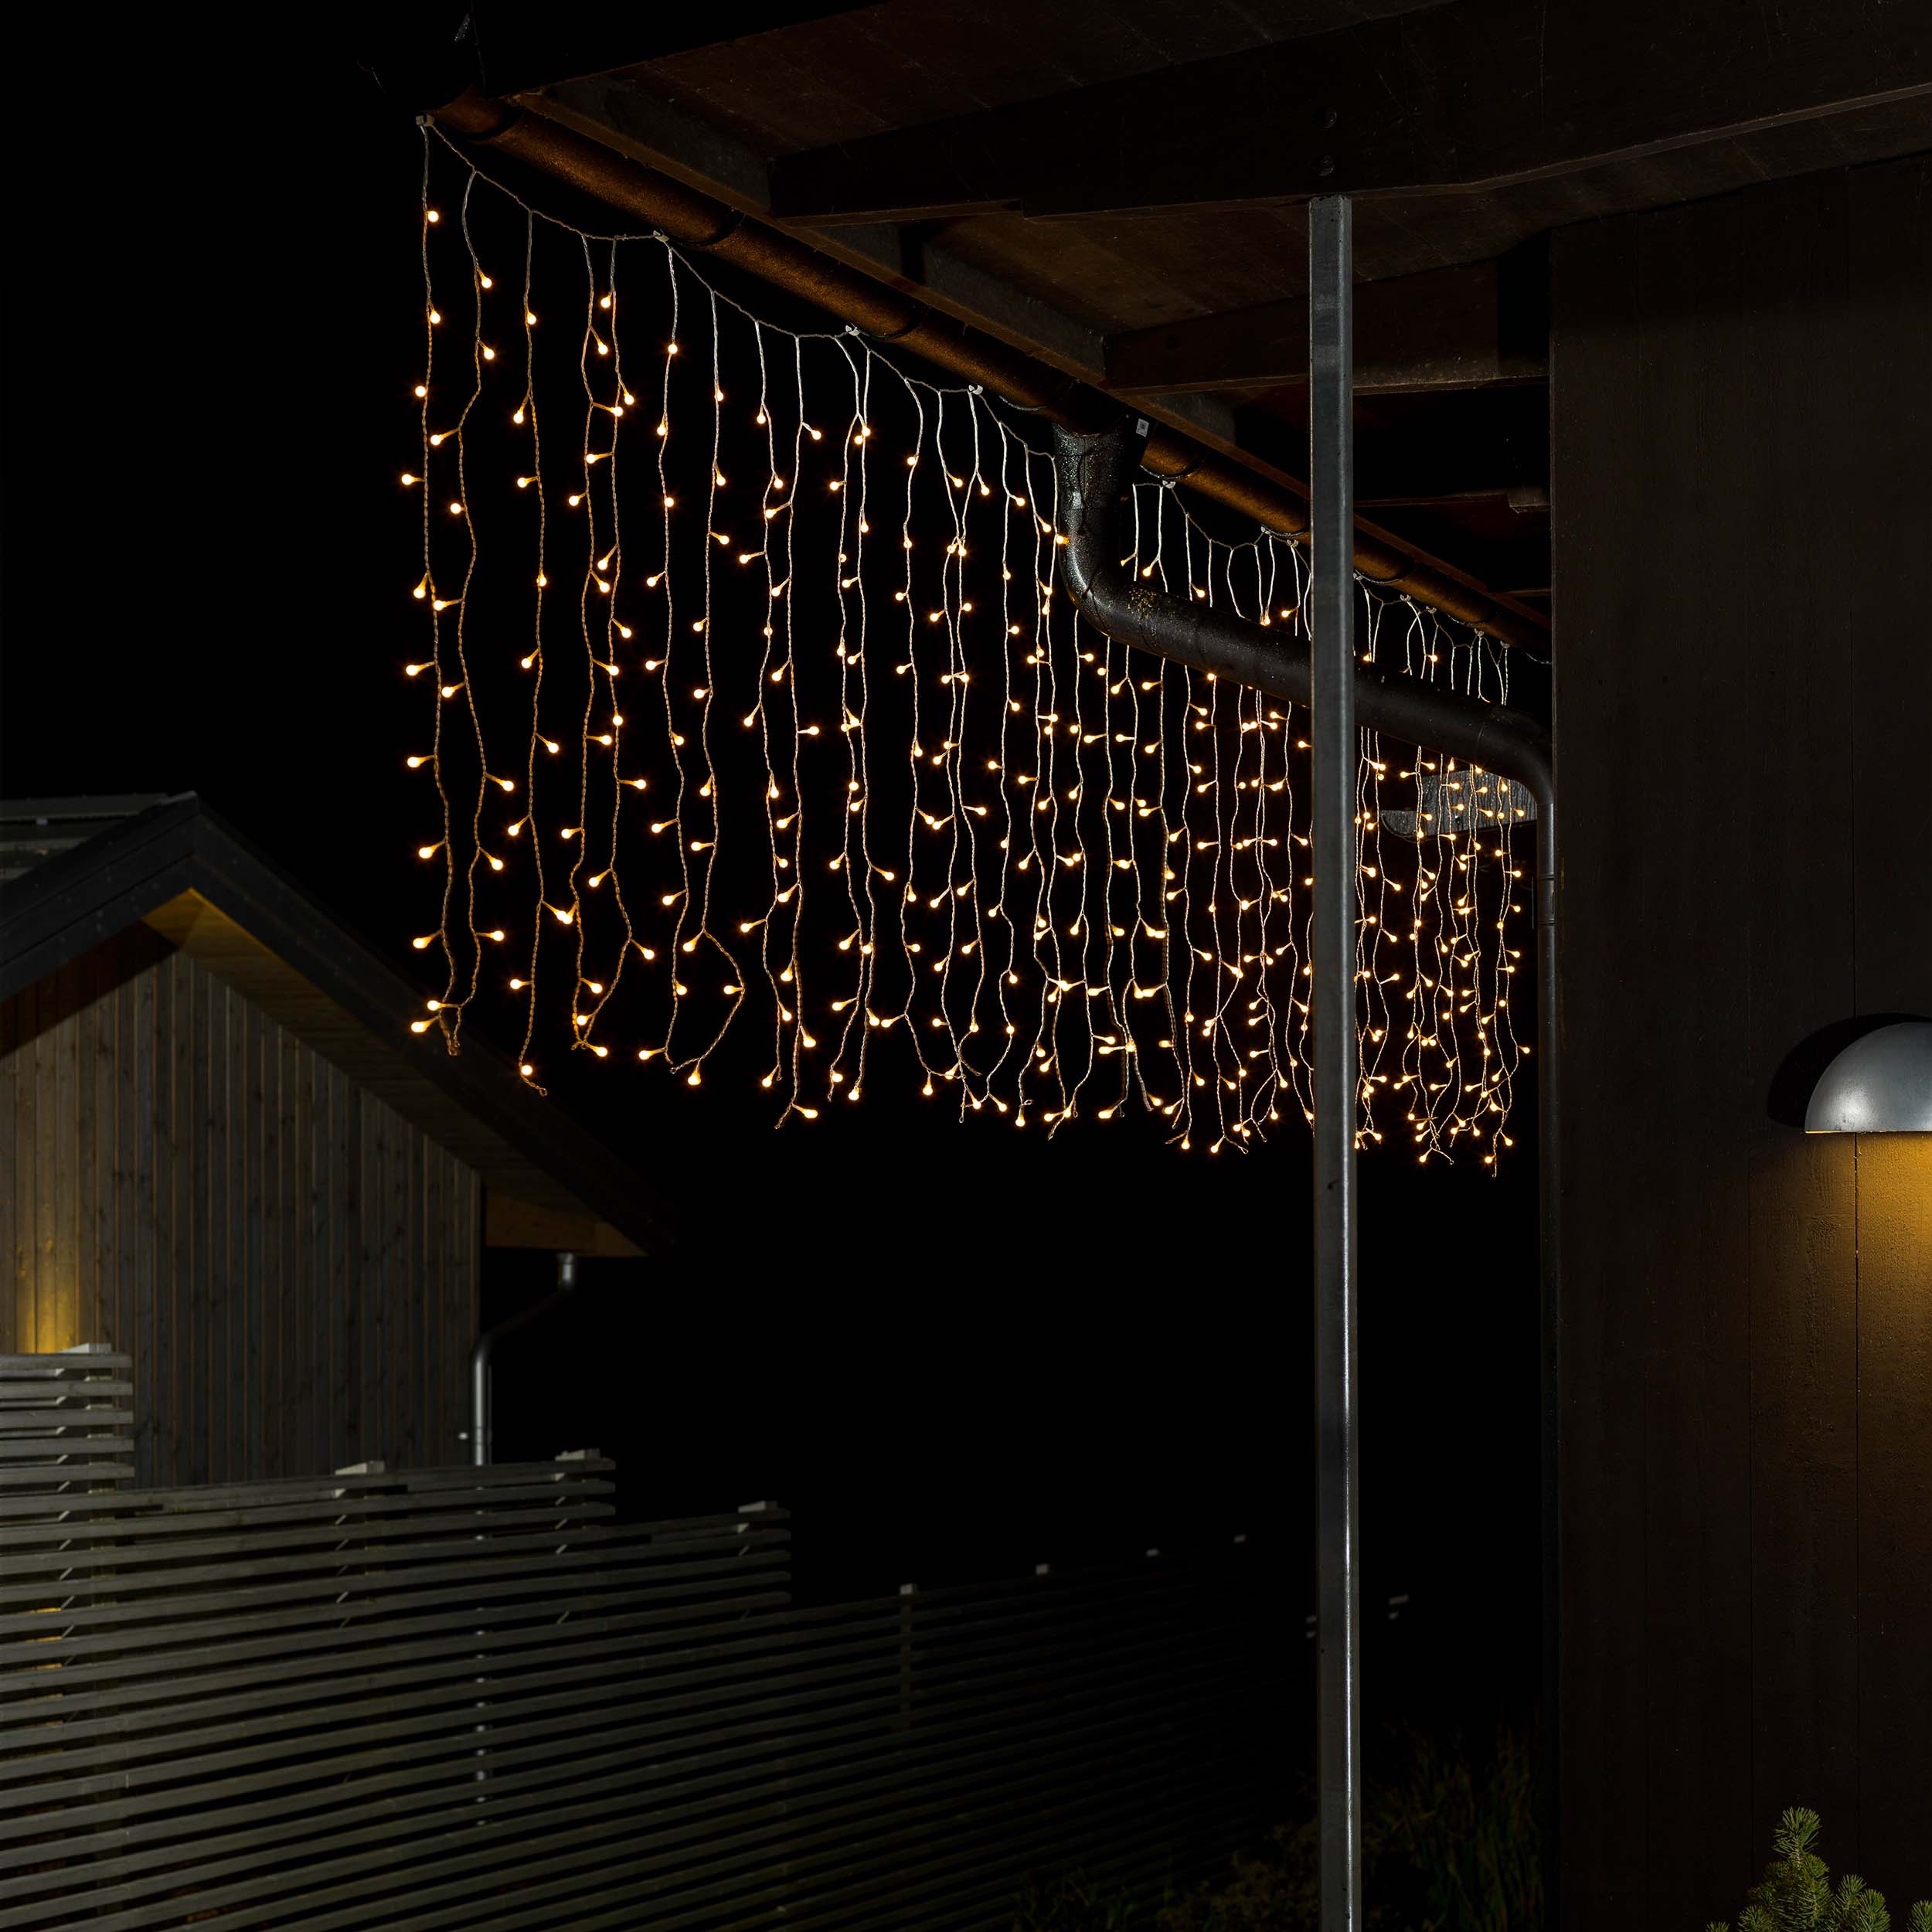 LED light curtain with 200 warmwhite LEDs